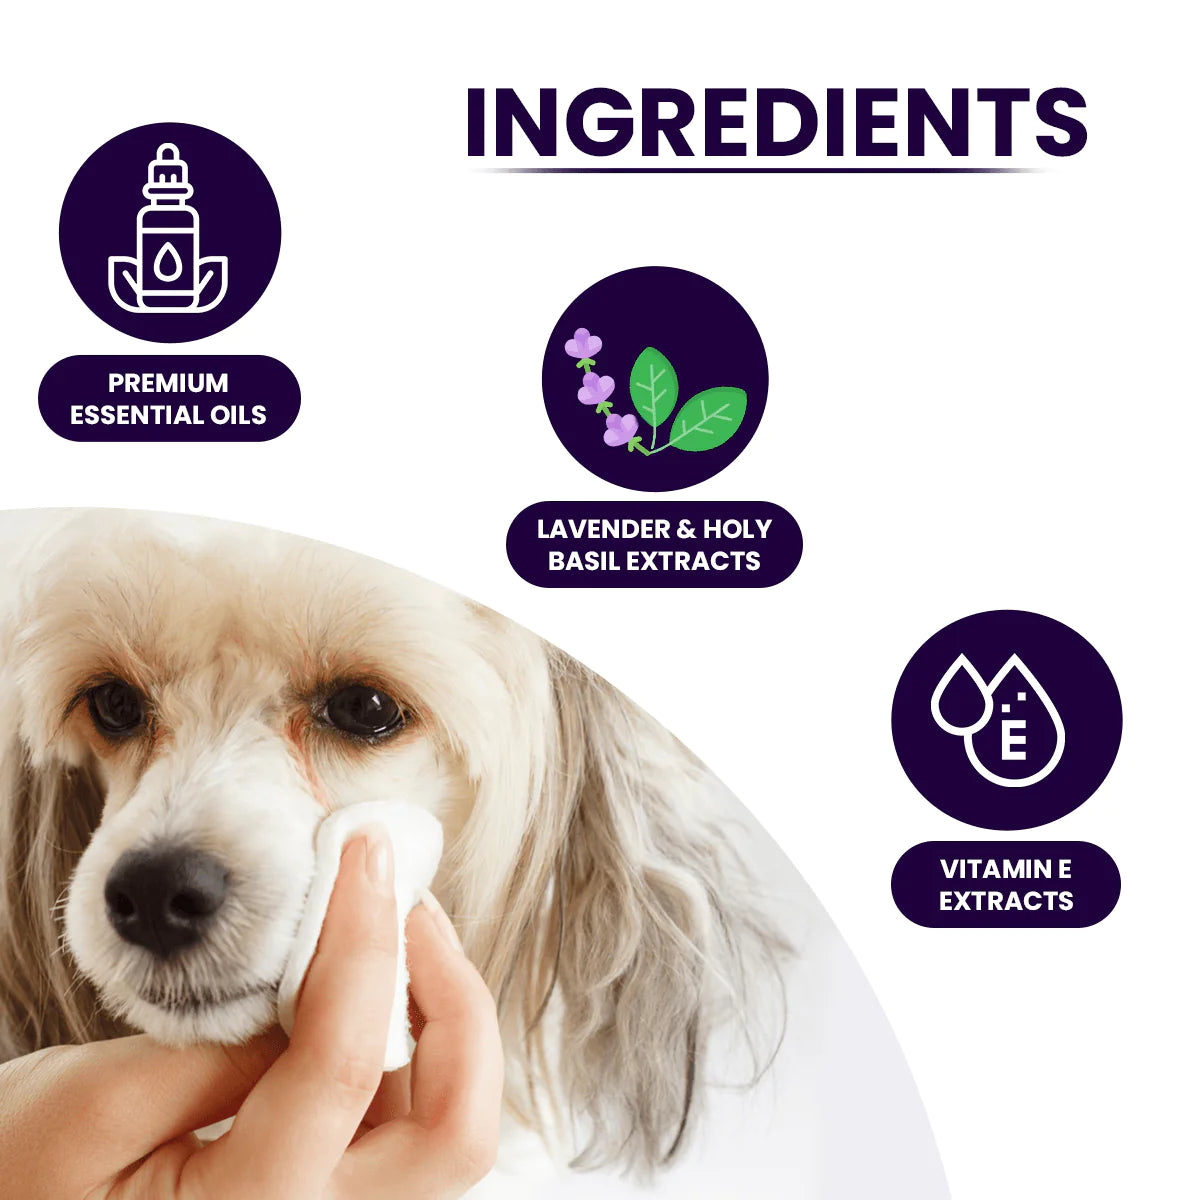 TopDog Premium Pet Sanitizing Wipes -  Lavender, 80 Pulls